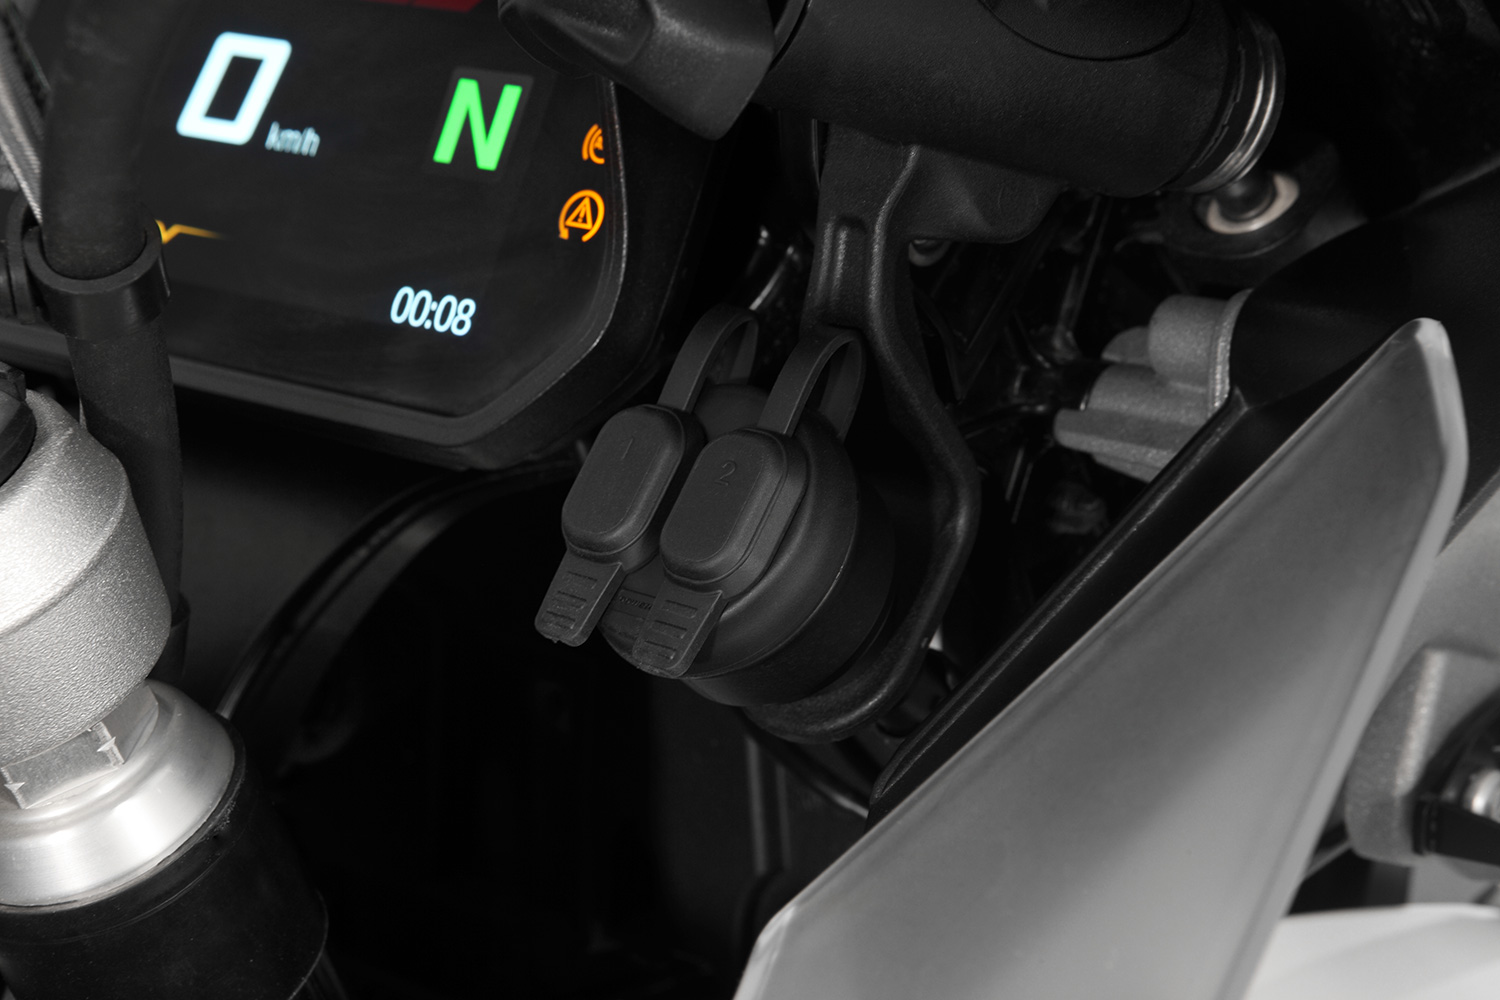 Doppel-USB Plug-n-Play Einbausteckdose für BMW Motorräder